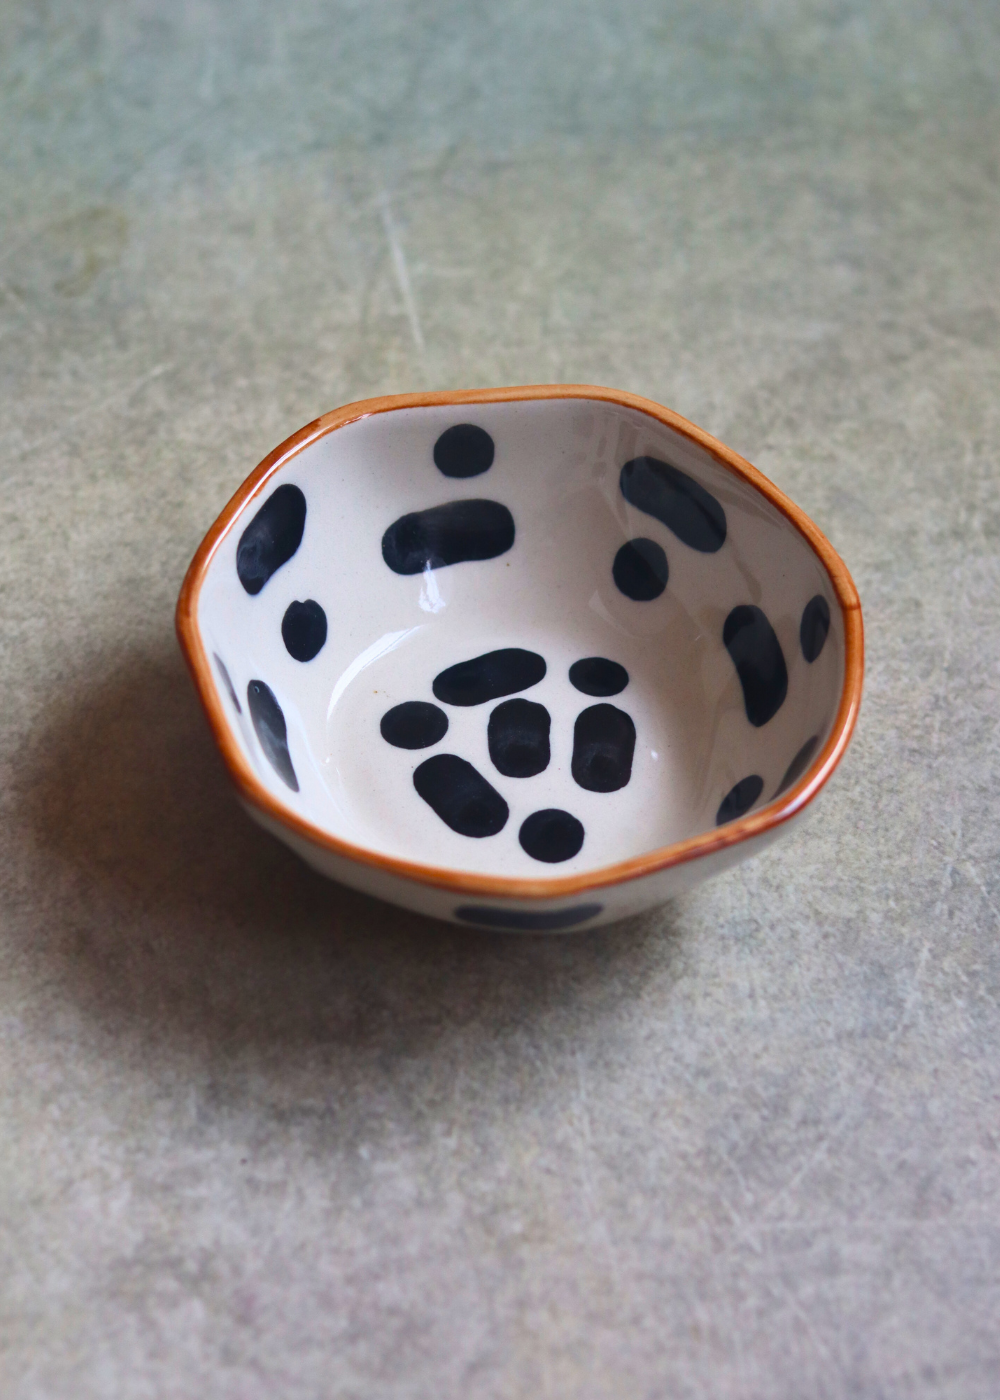 Handmade ceramic bowl 